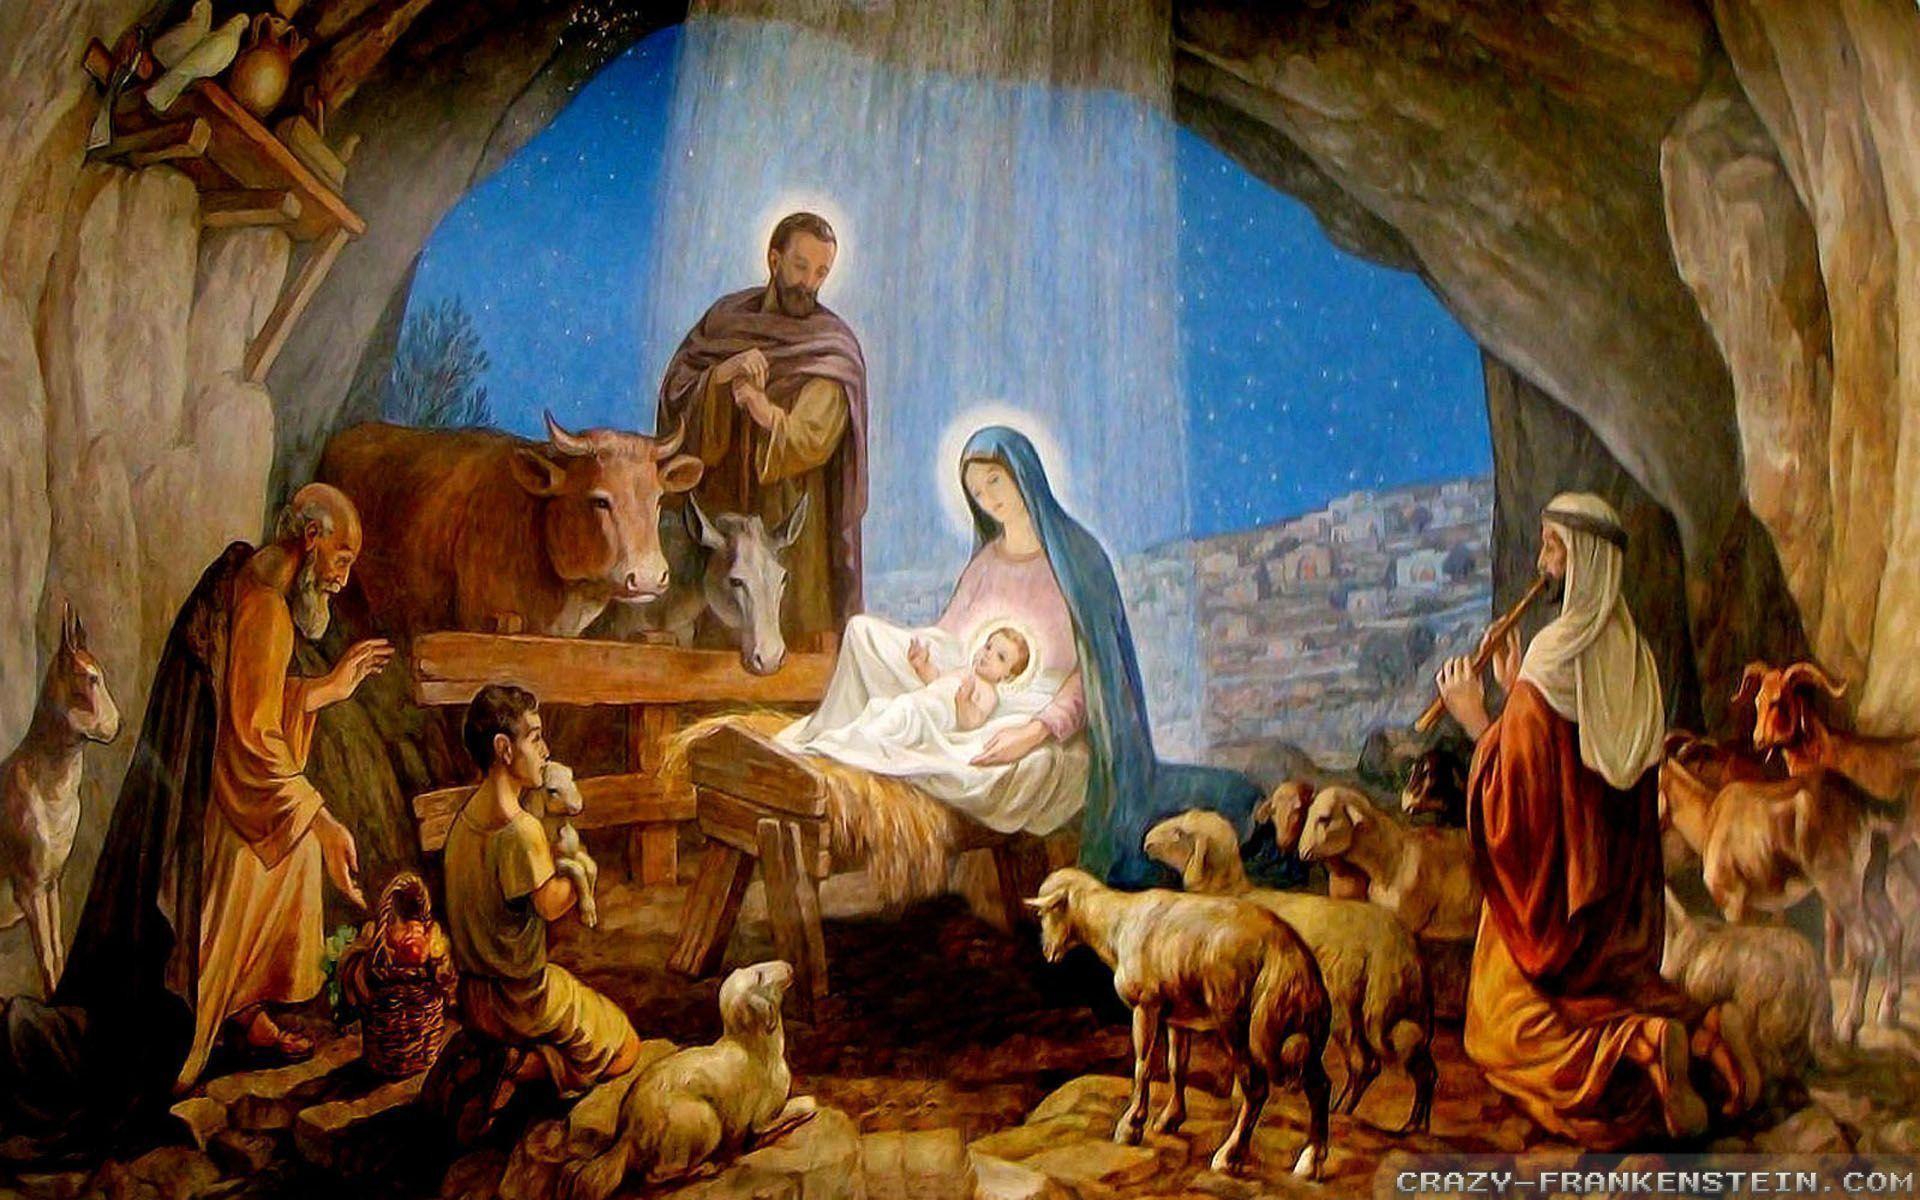 Jesus Christmas Wallpaper